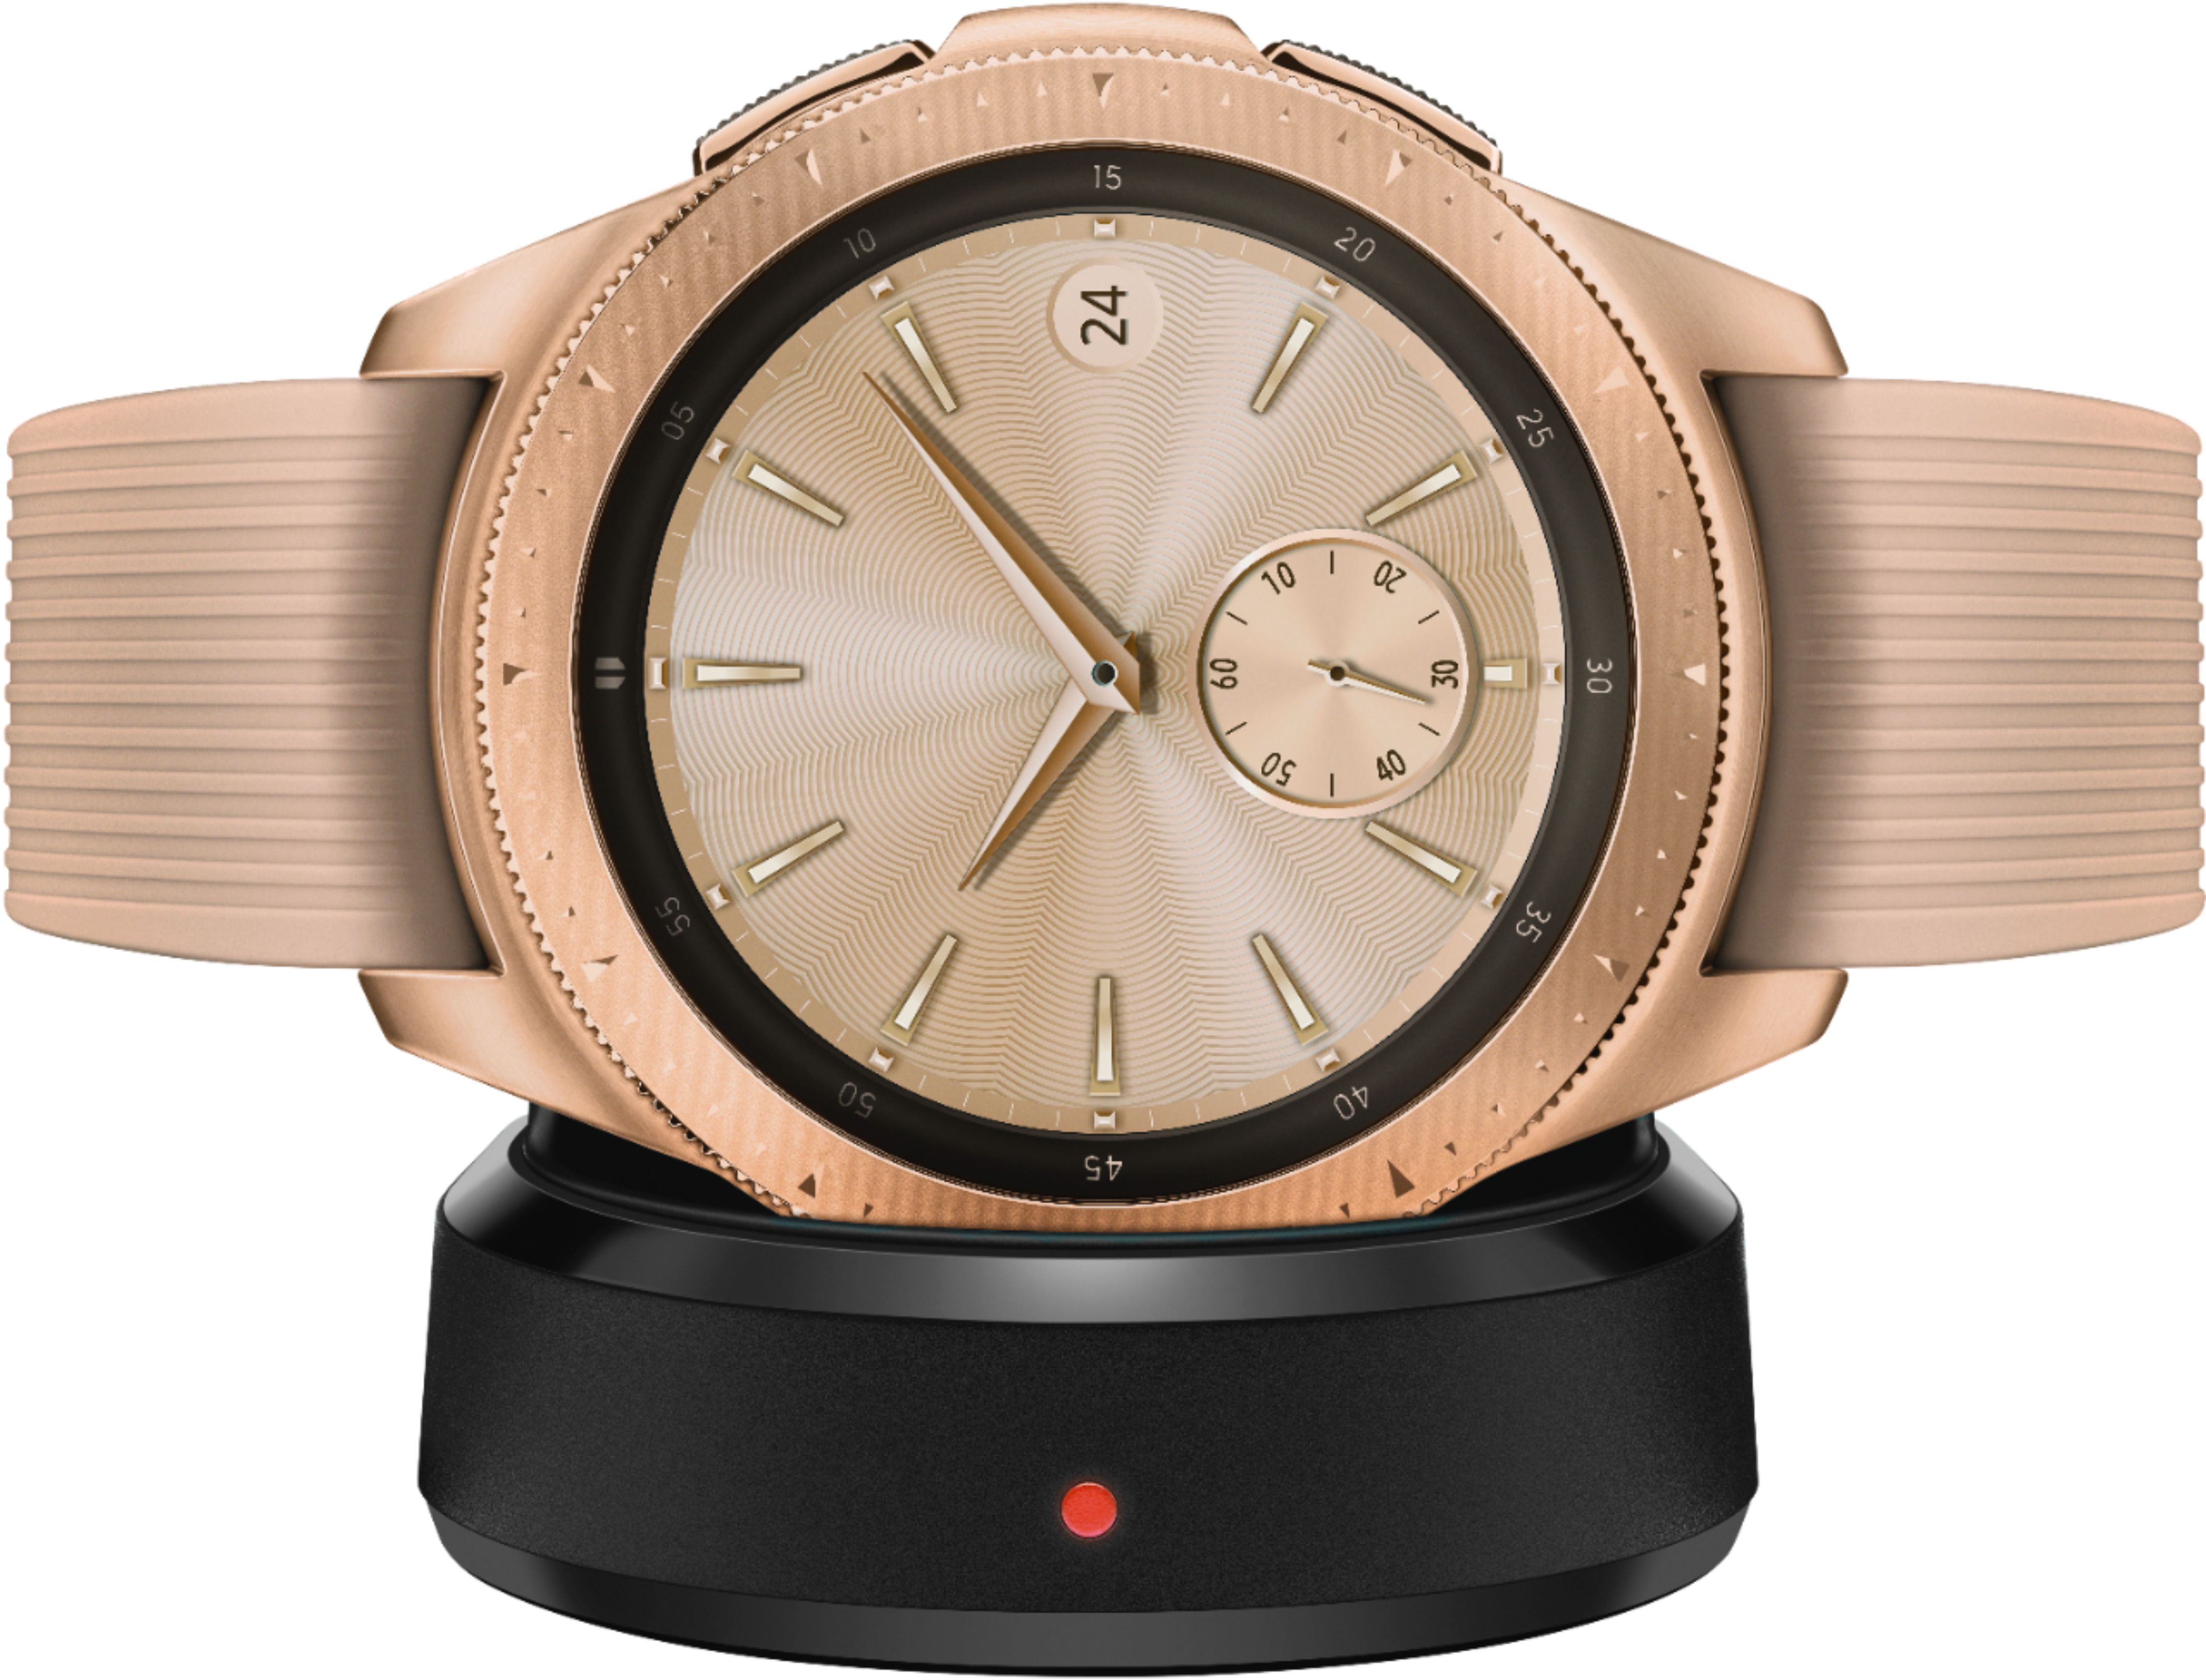 Samsung Galaxy Watch Smartwatch 42mm 